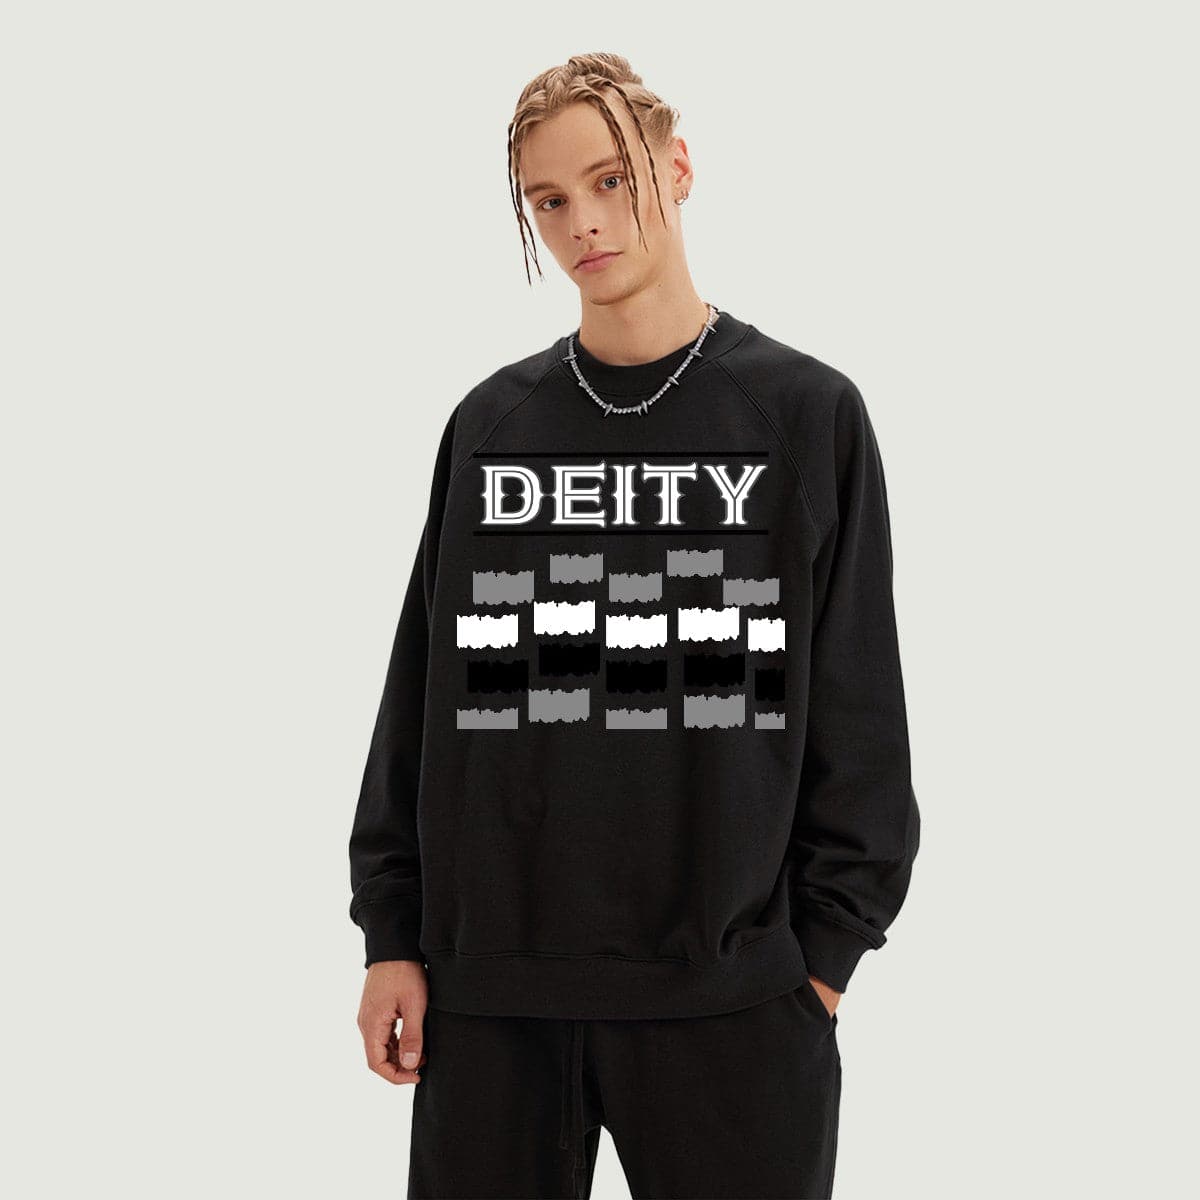 Black S Deity Unisex Heavyweight Fleece-lined Sweatshirt | 100% Cotton - Unisex Sweatshirt at TFC&H Co.